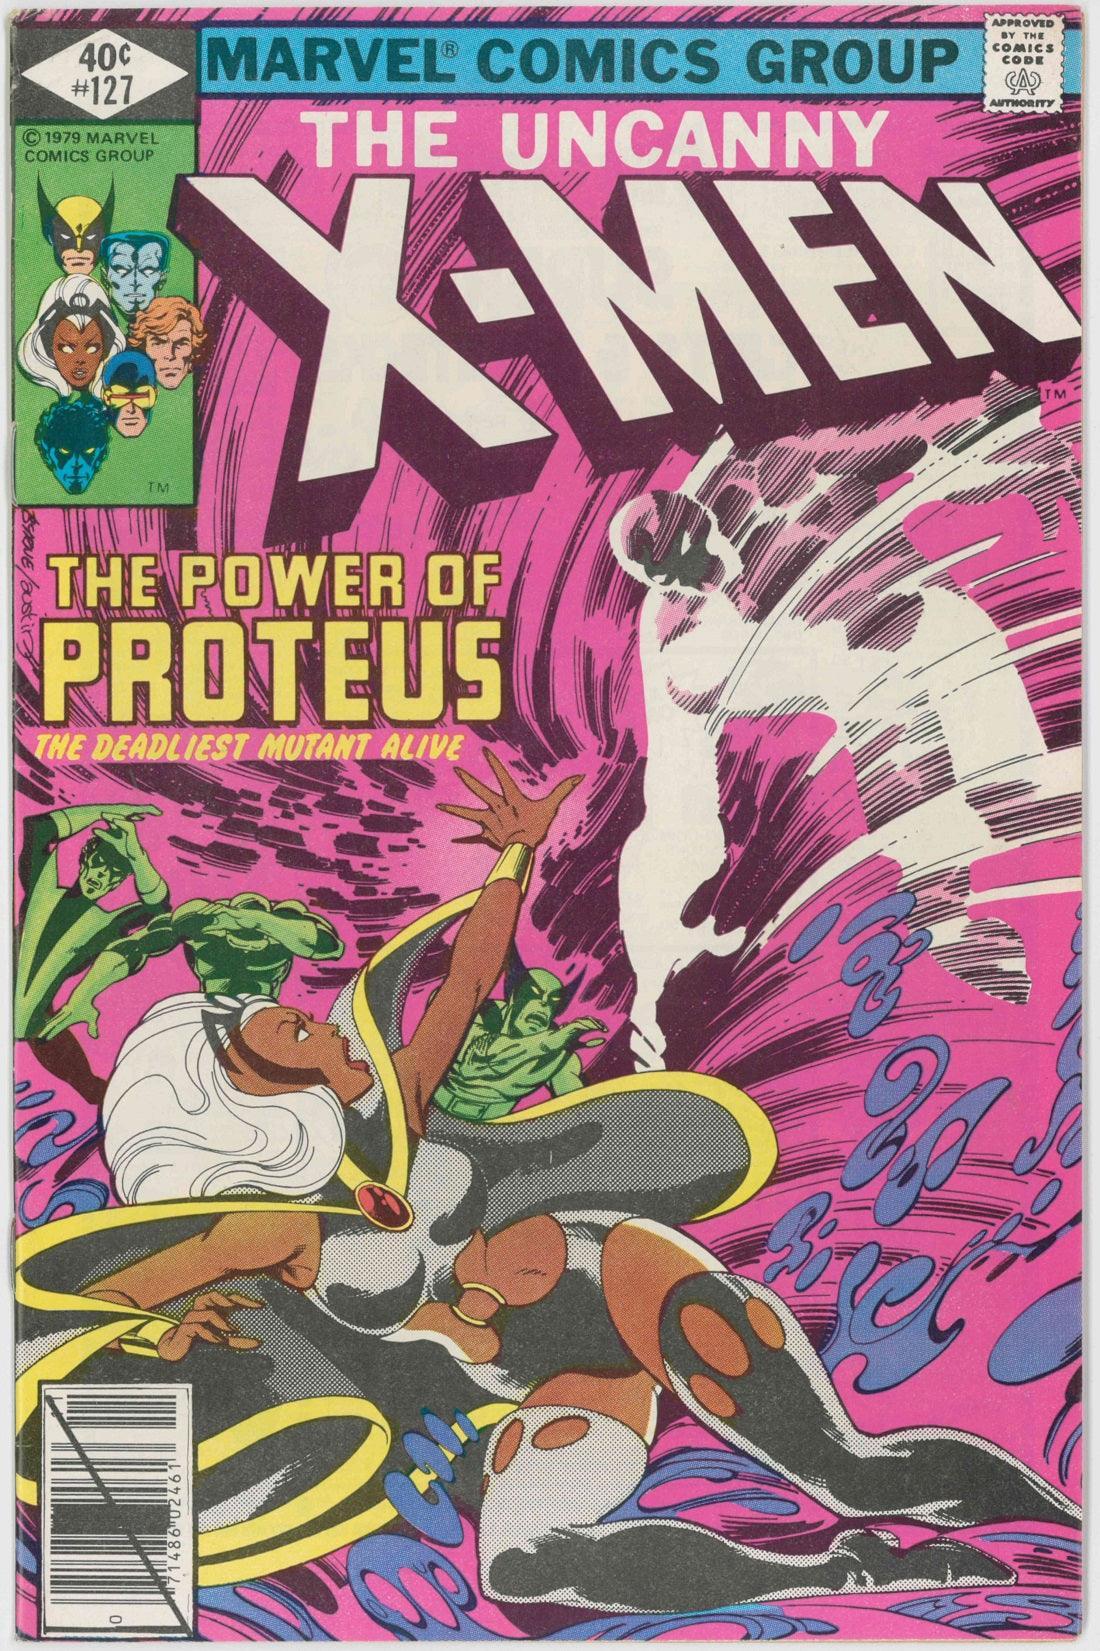 UNCANNY X-MEN (1963) #127 (VF/NM) - Kings Comics